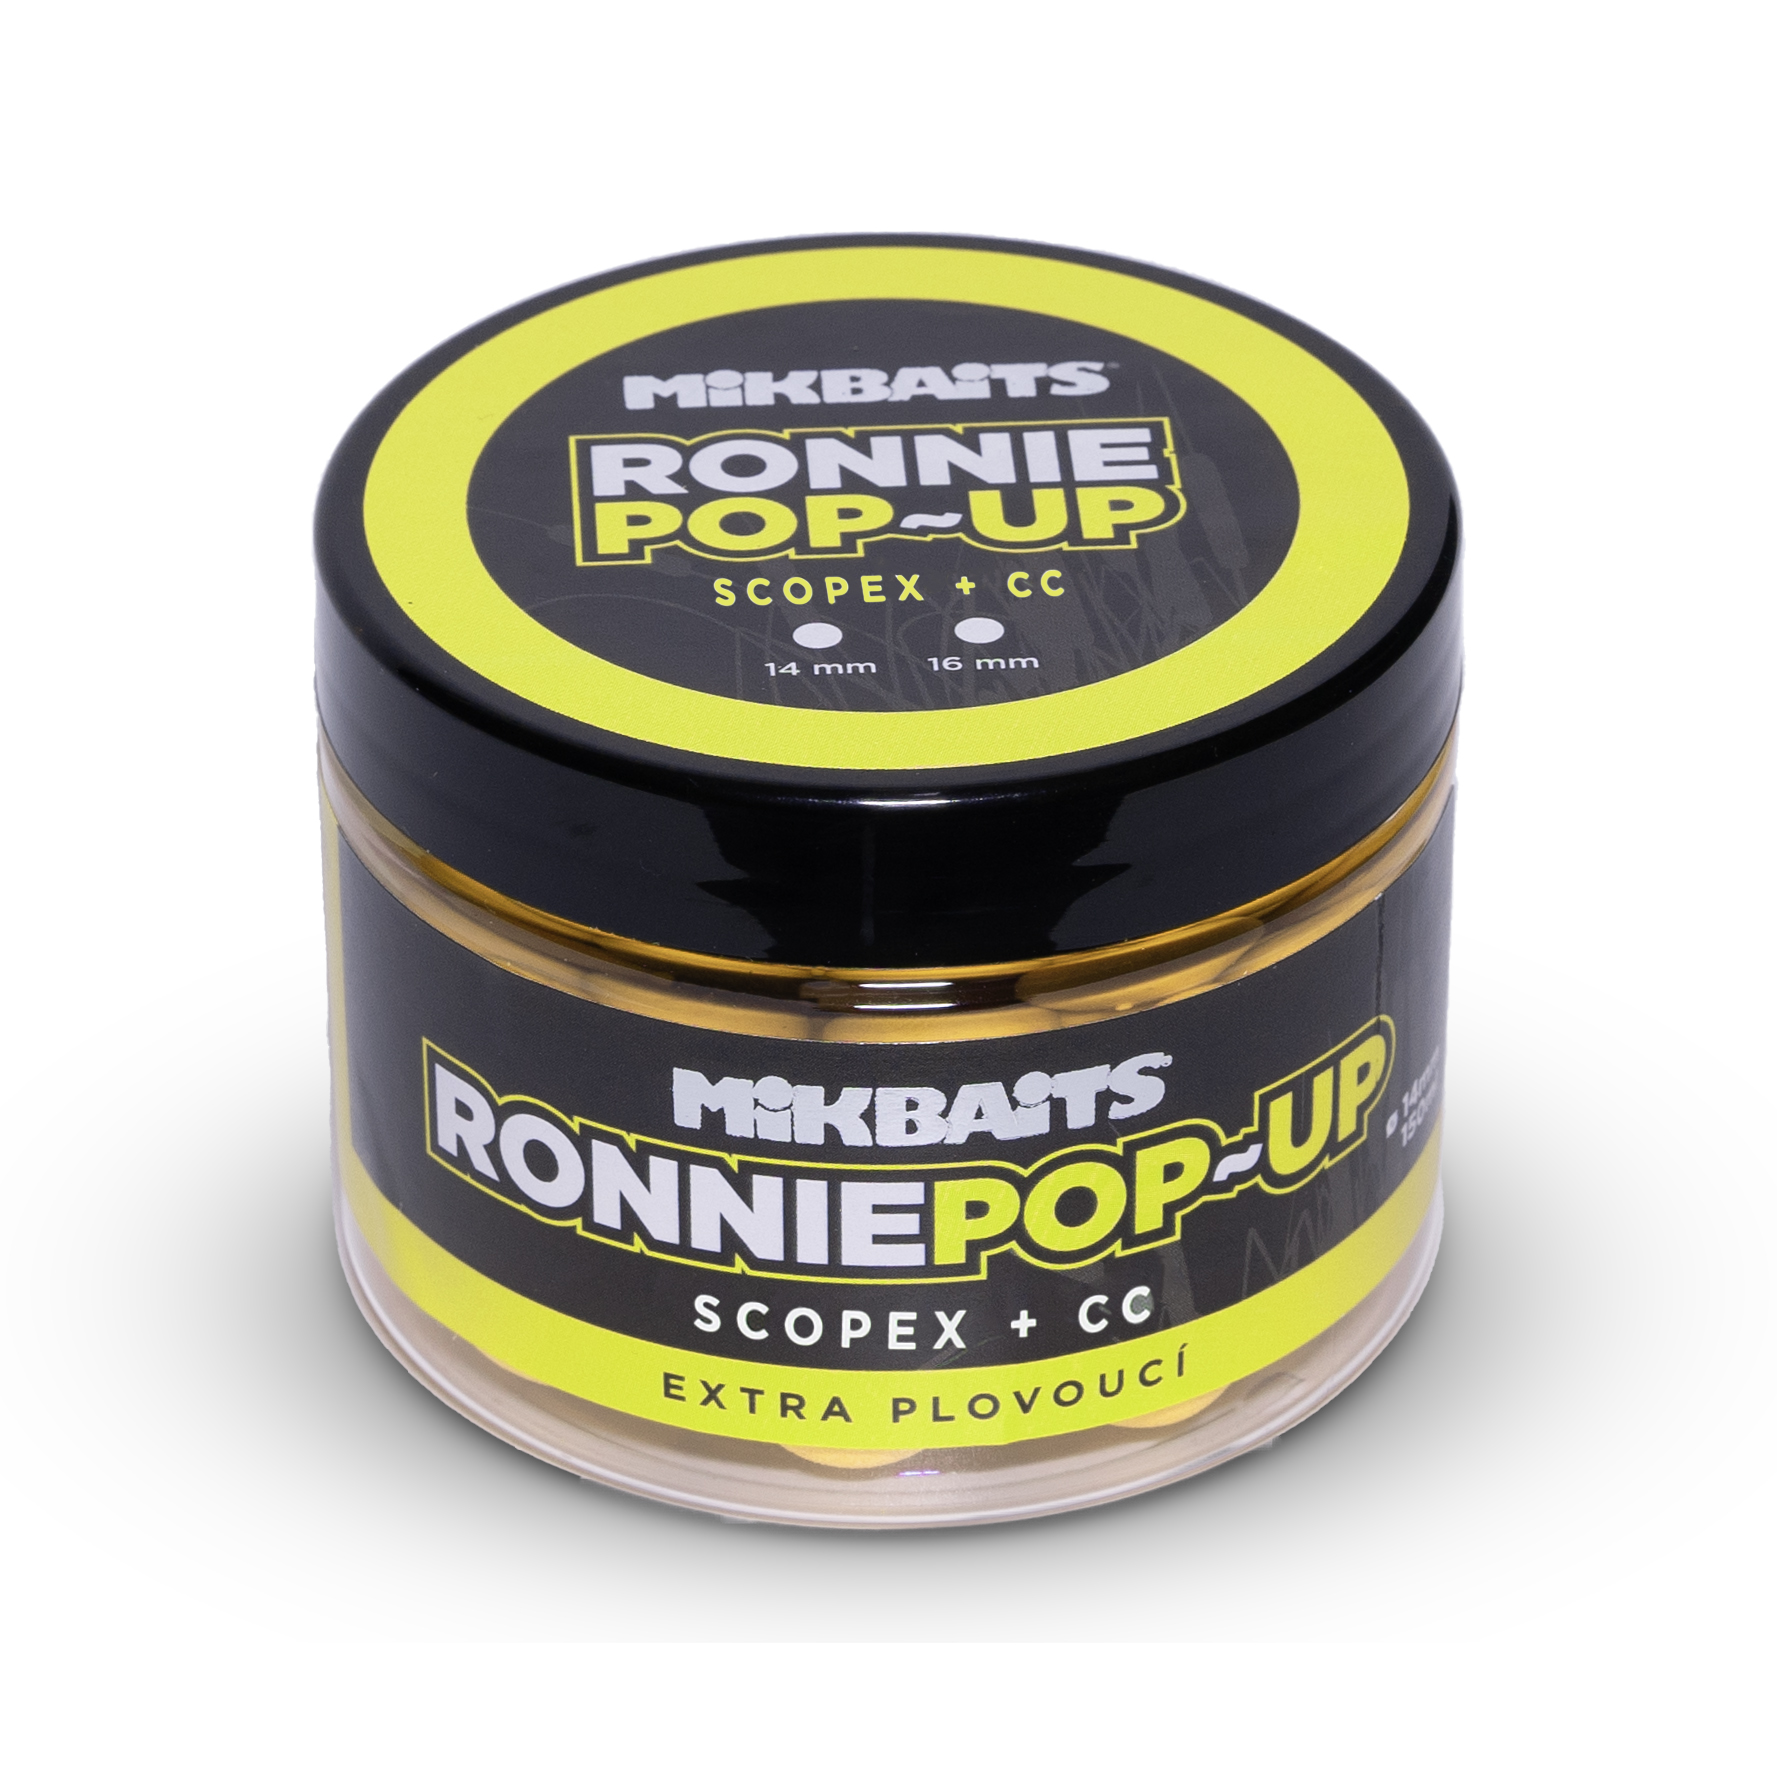 Ronnie pop-up 150ml - Scopex + CC 14mm